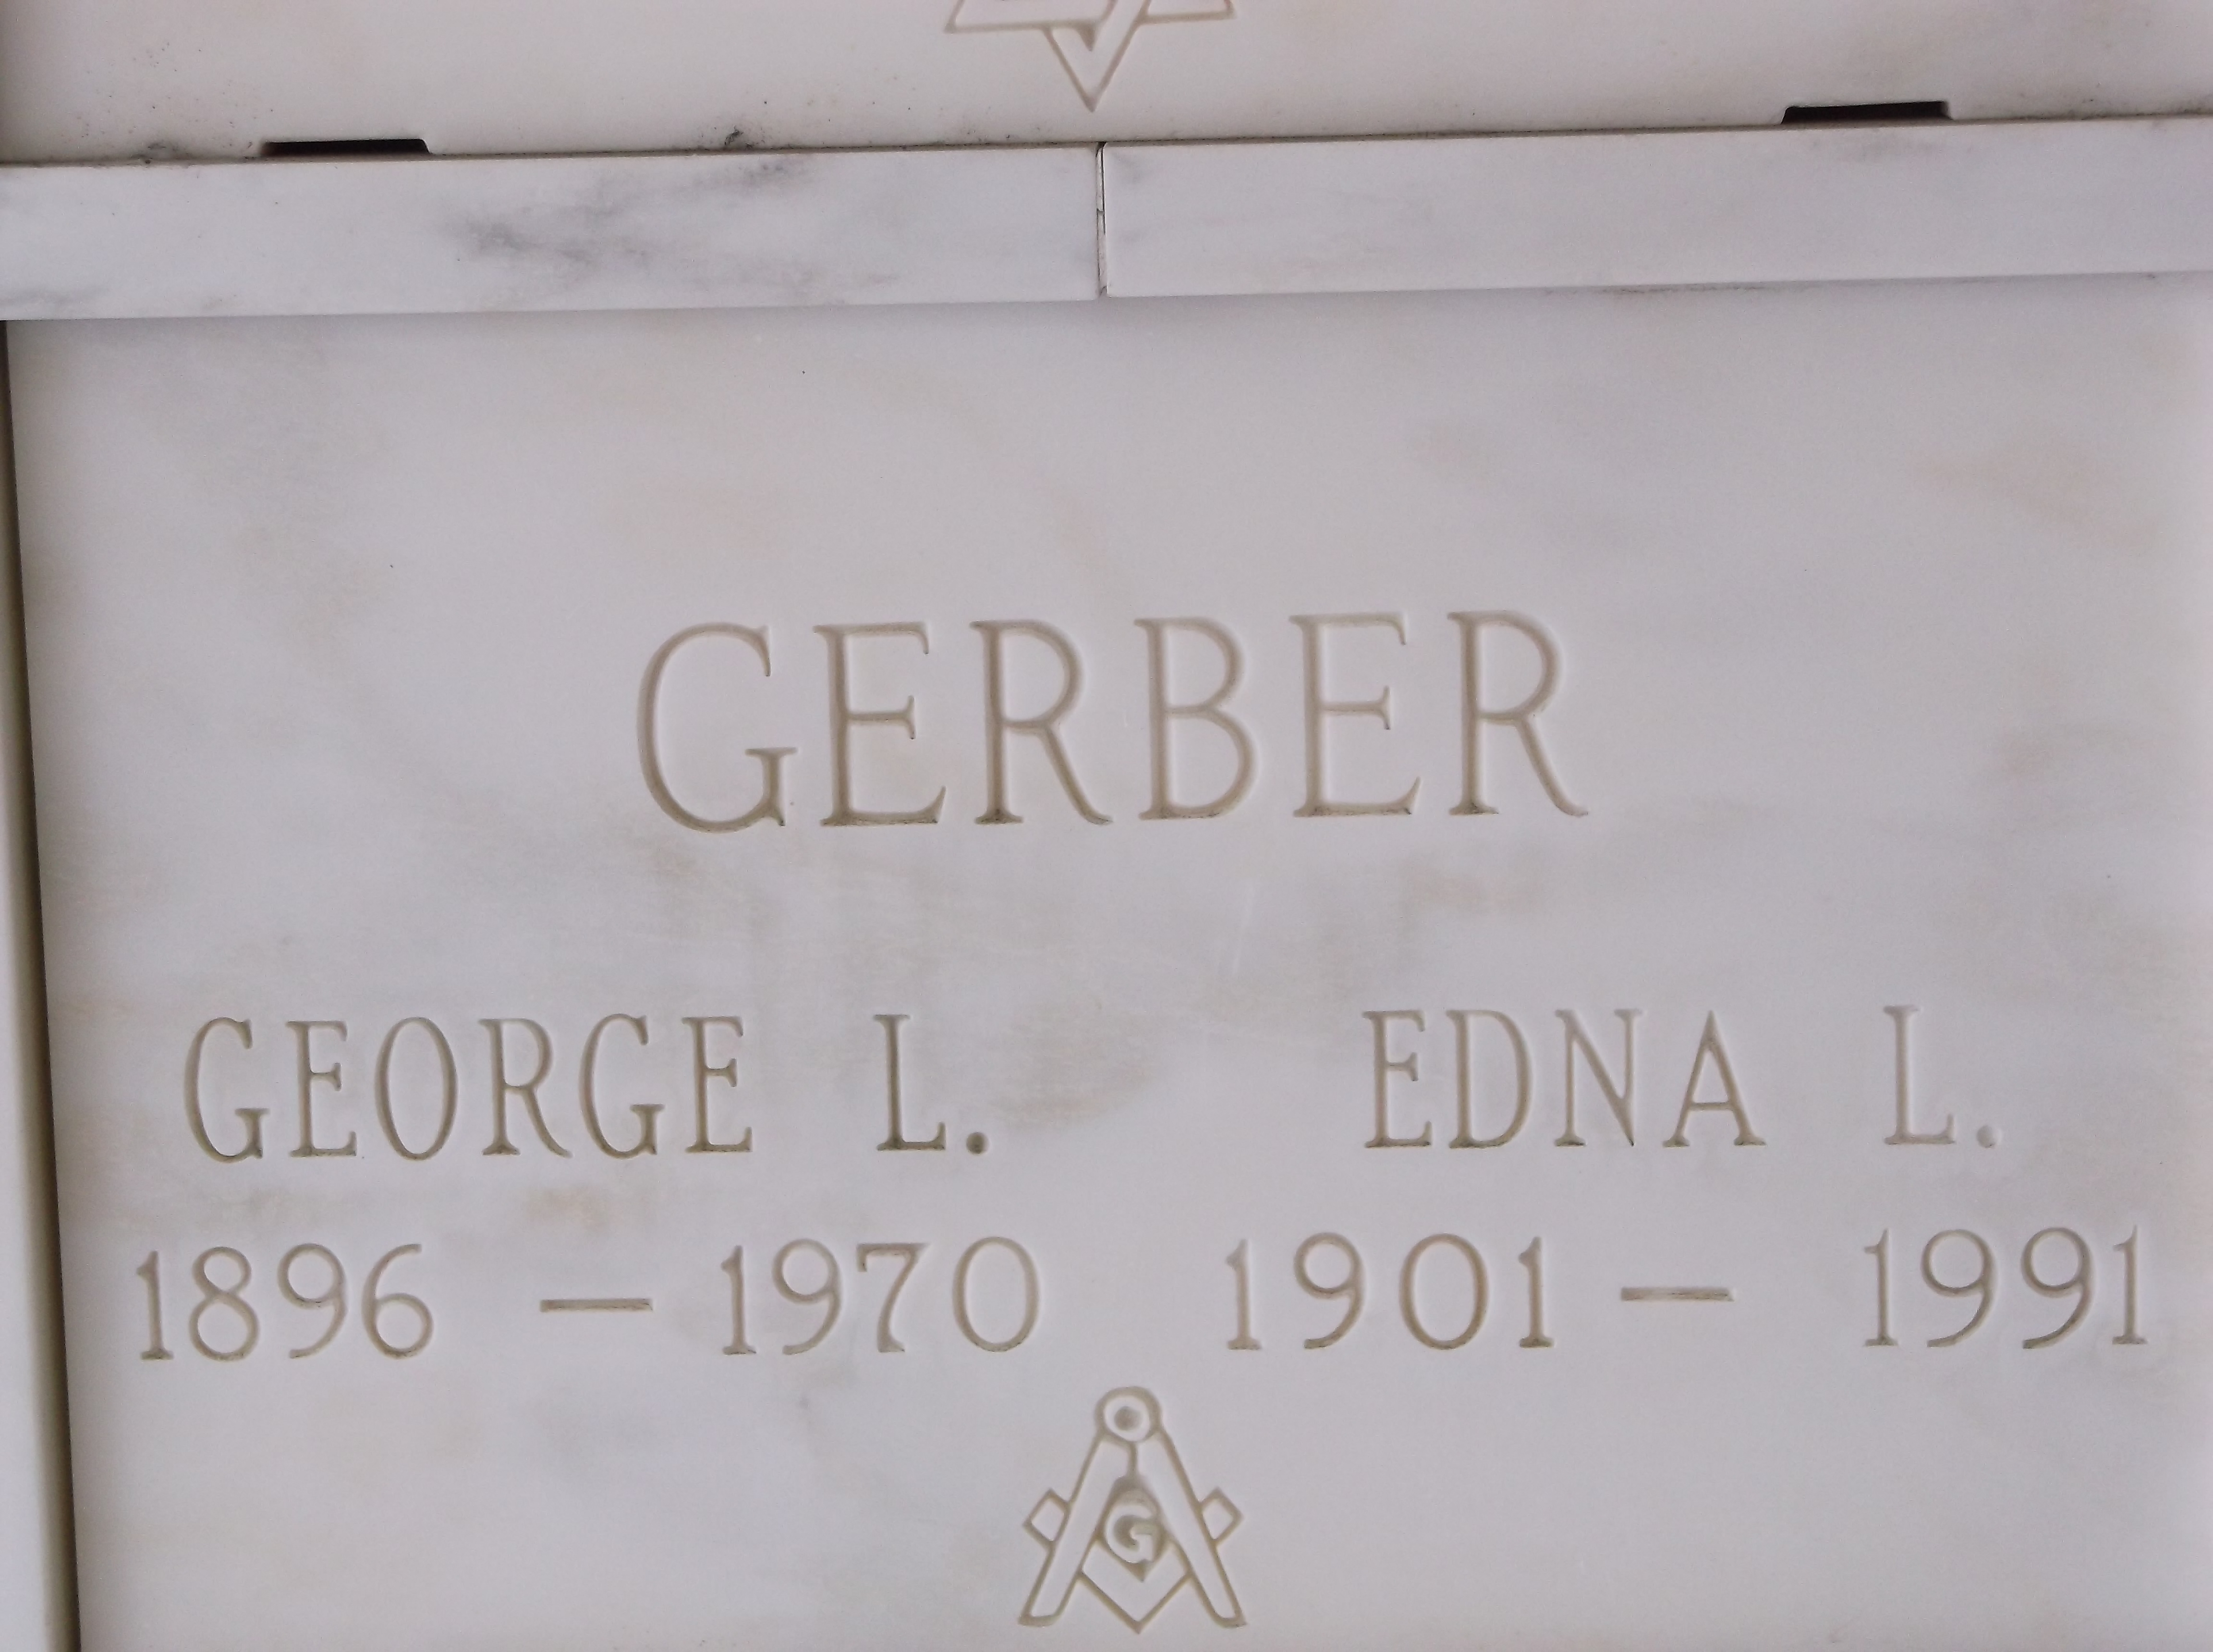 George L Gerber